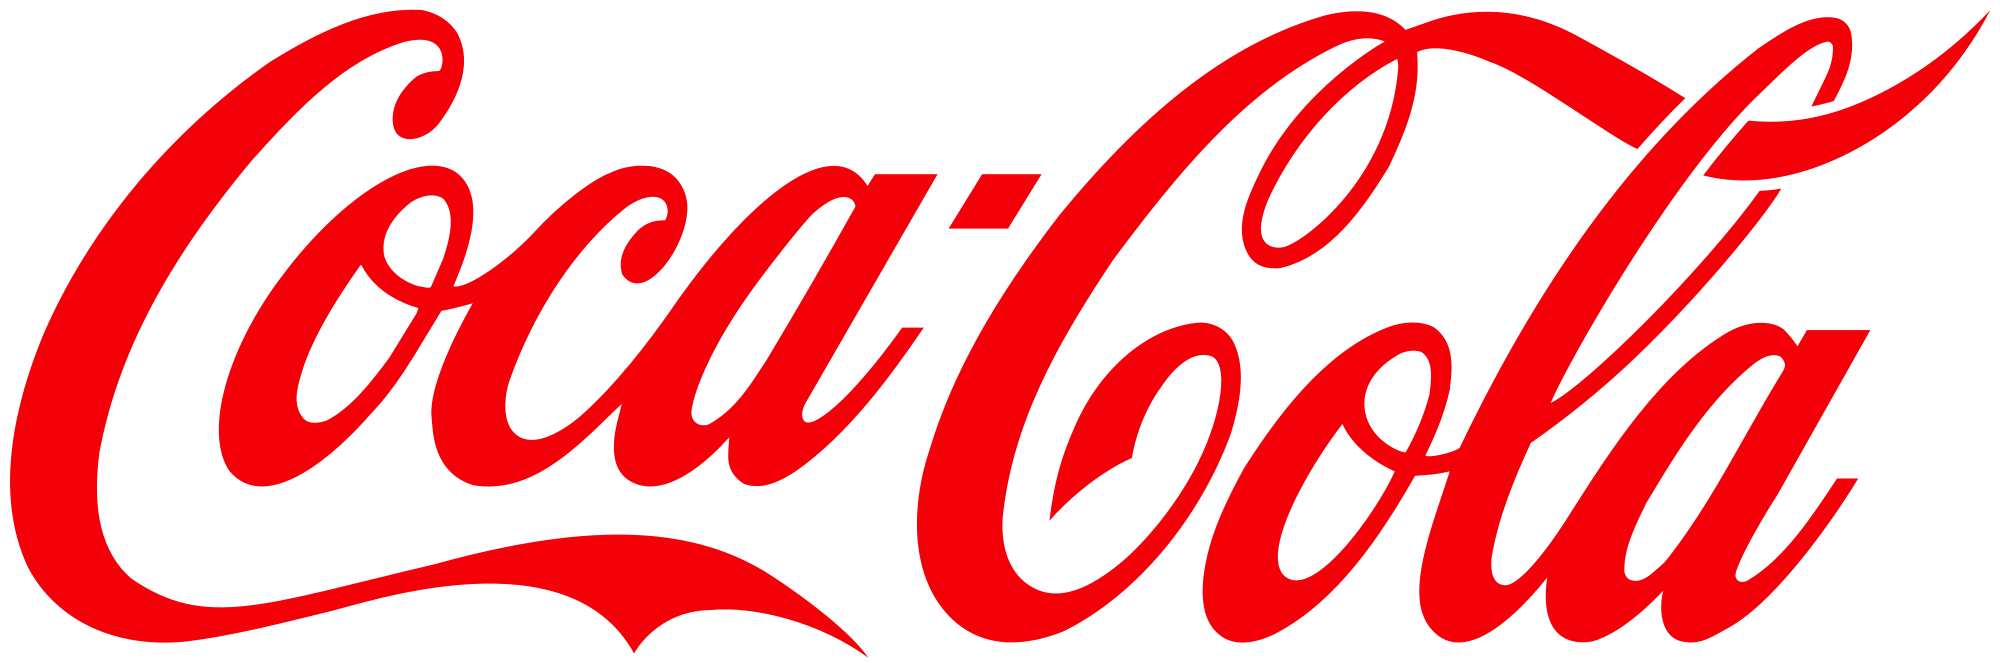 Attachment Logo - Coca cola logo png